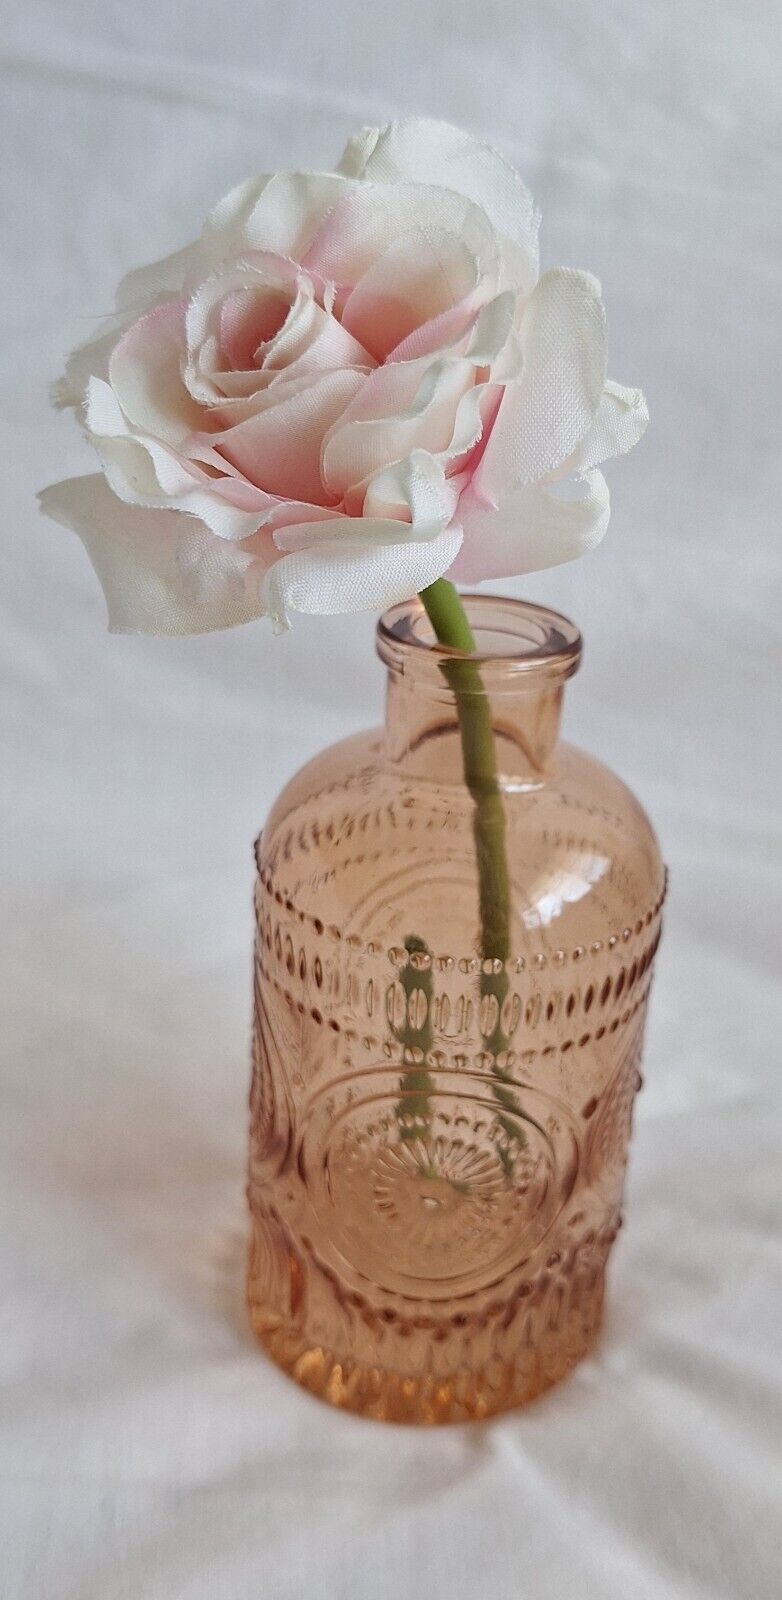 Vintage Orange Glass Bud Vase Small For Flowers 